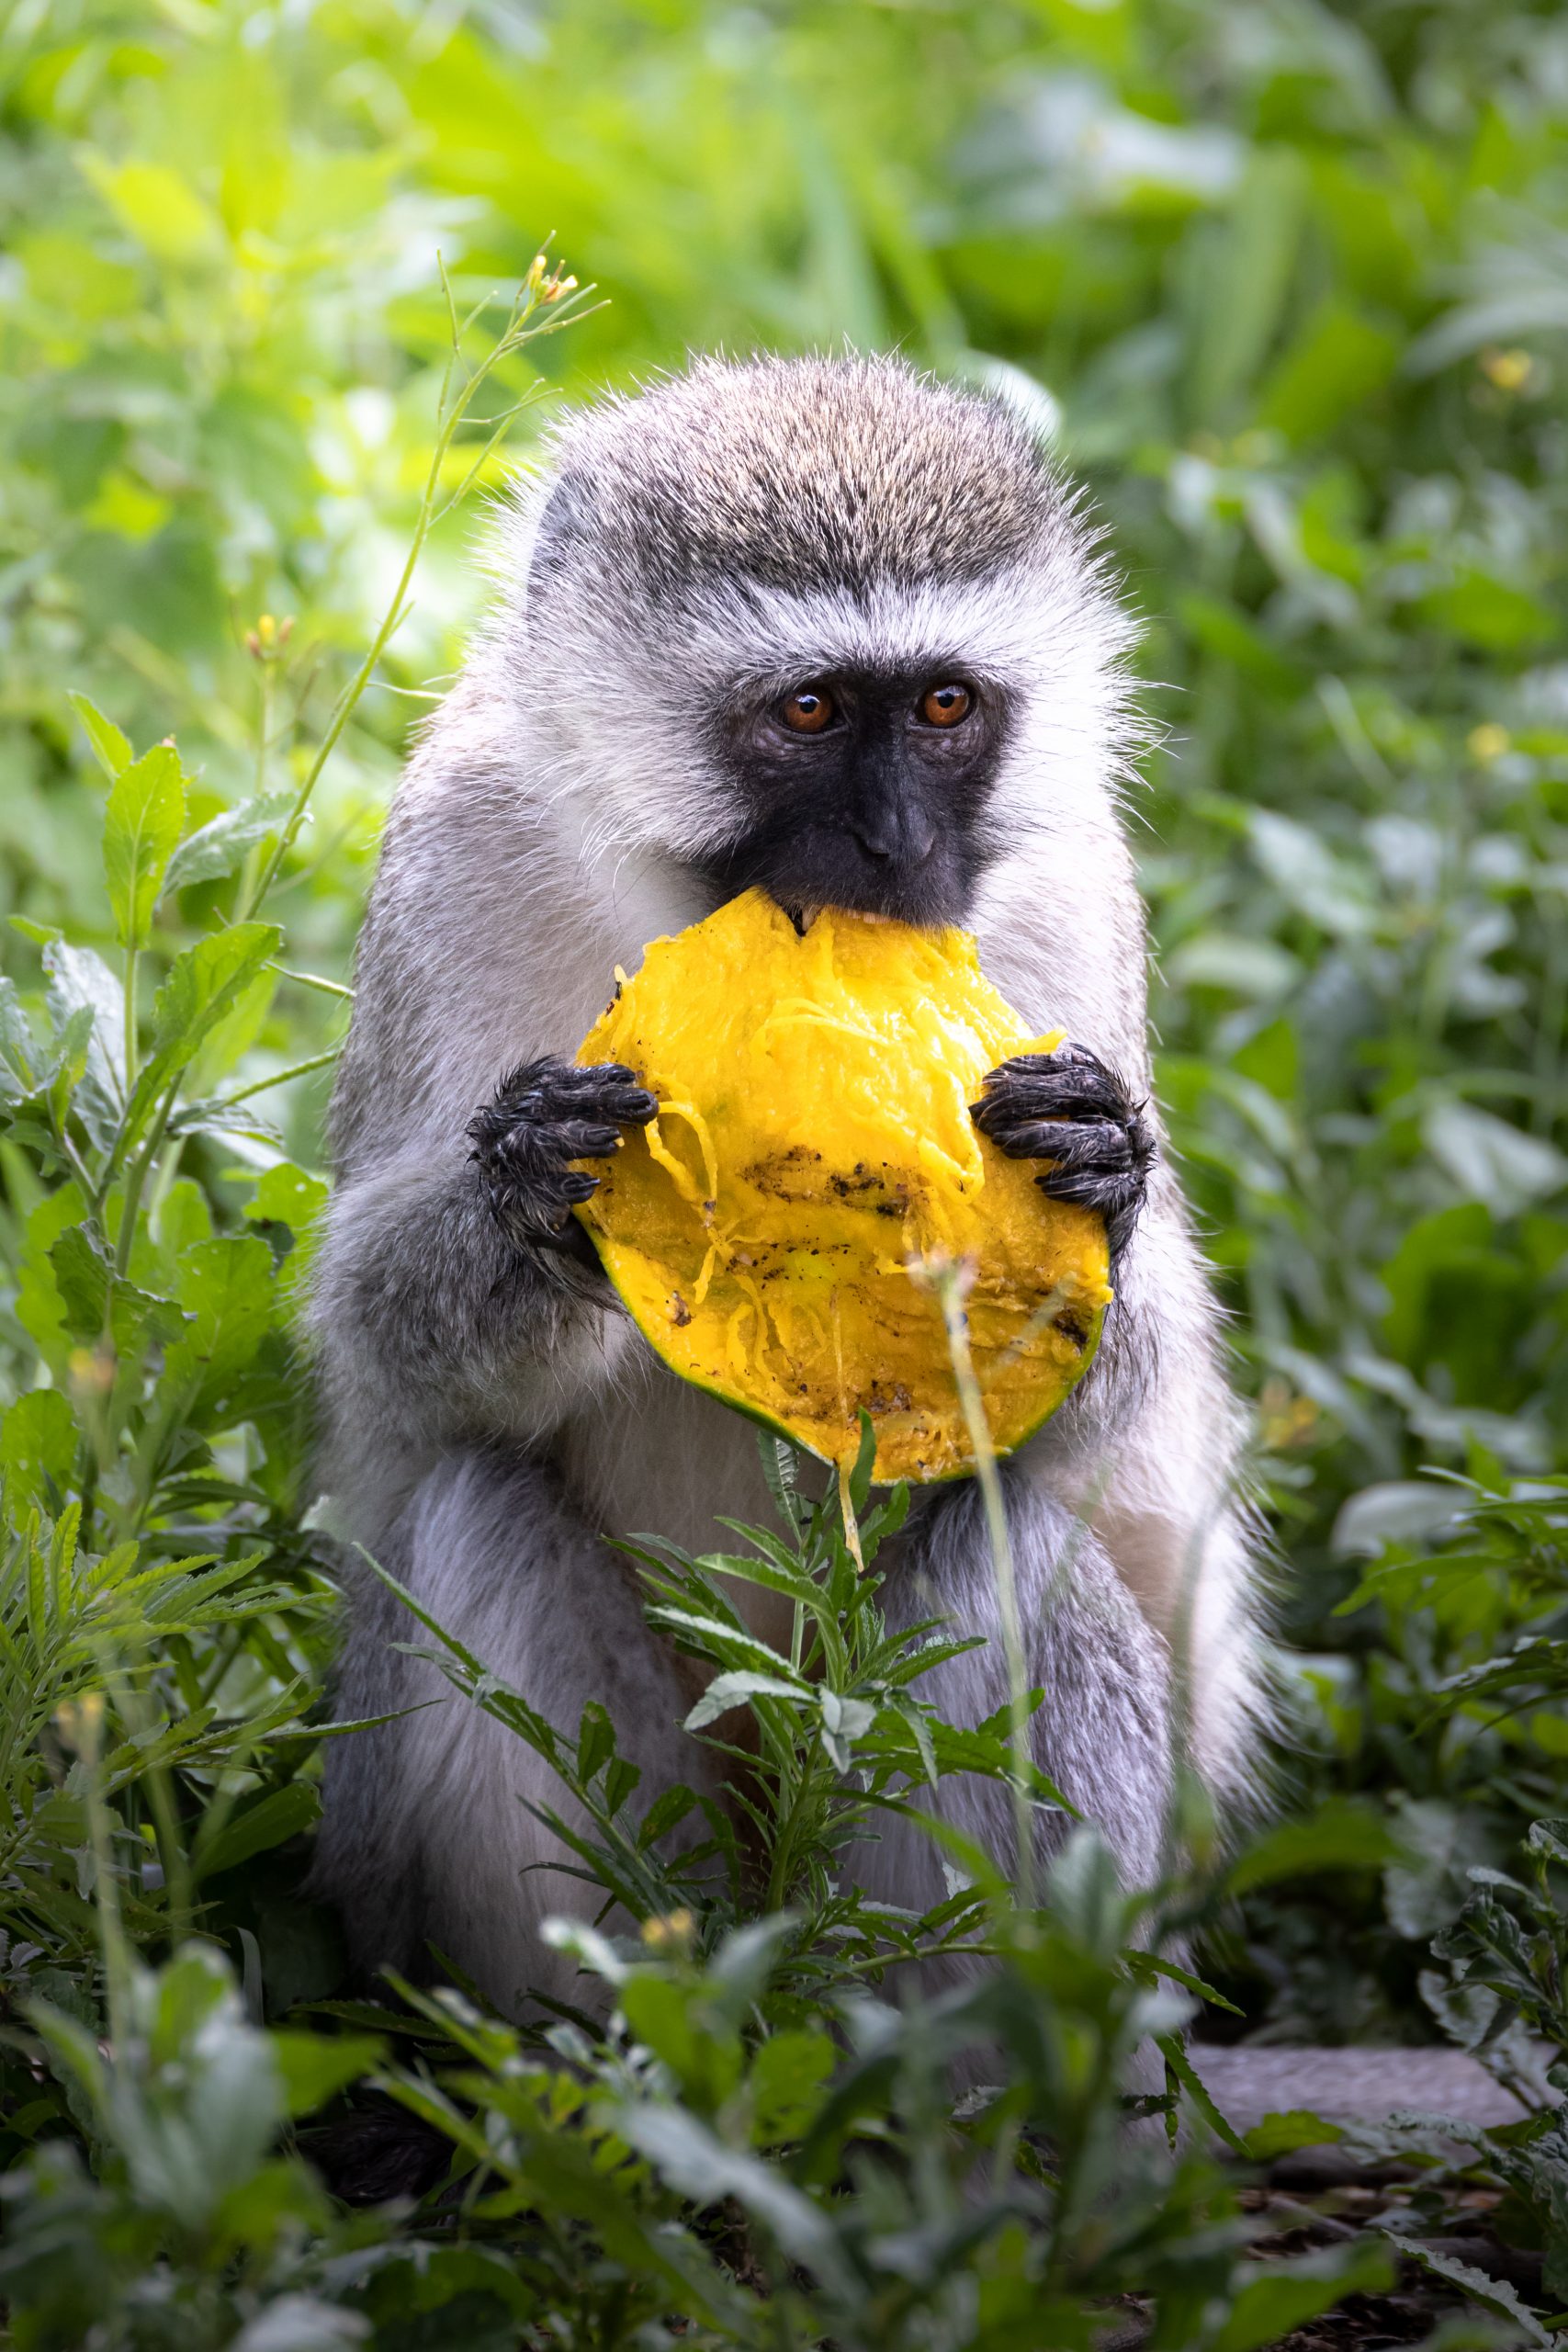 A Velvet Monkey eats a mango in the bush of the Serengeti National Park, Tanzania, Africa